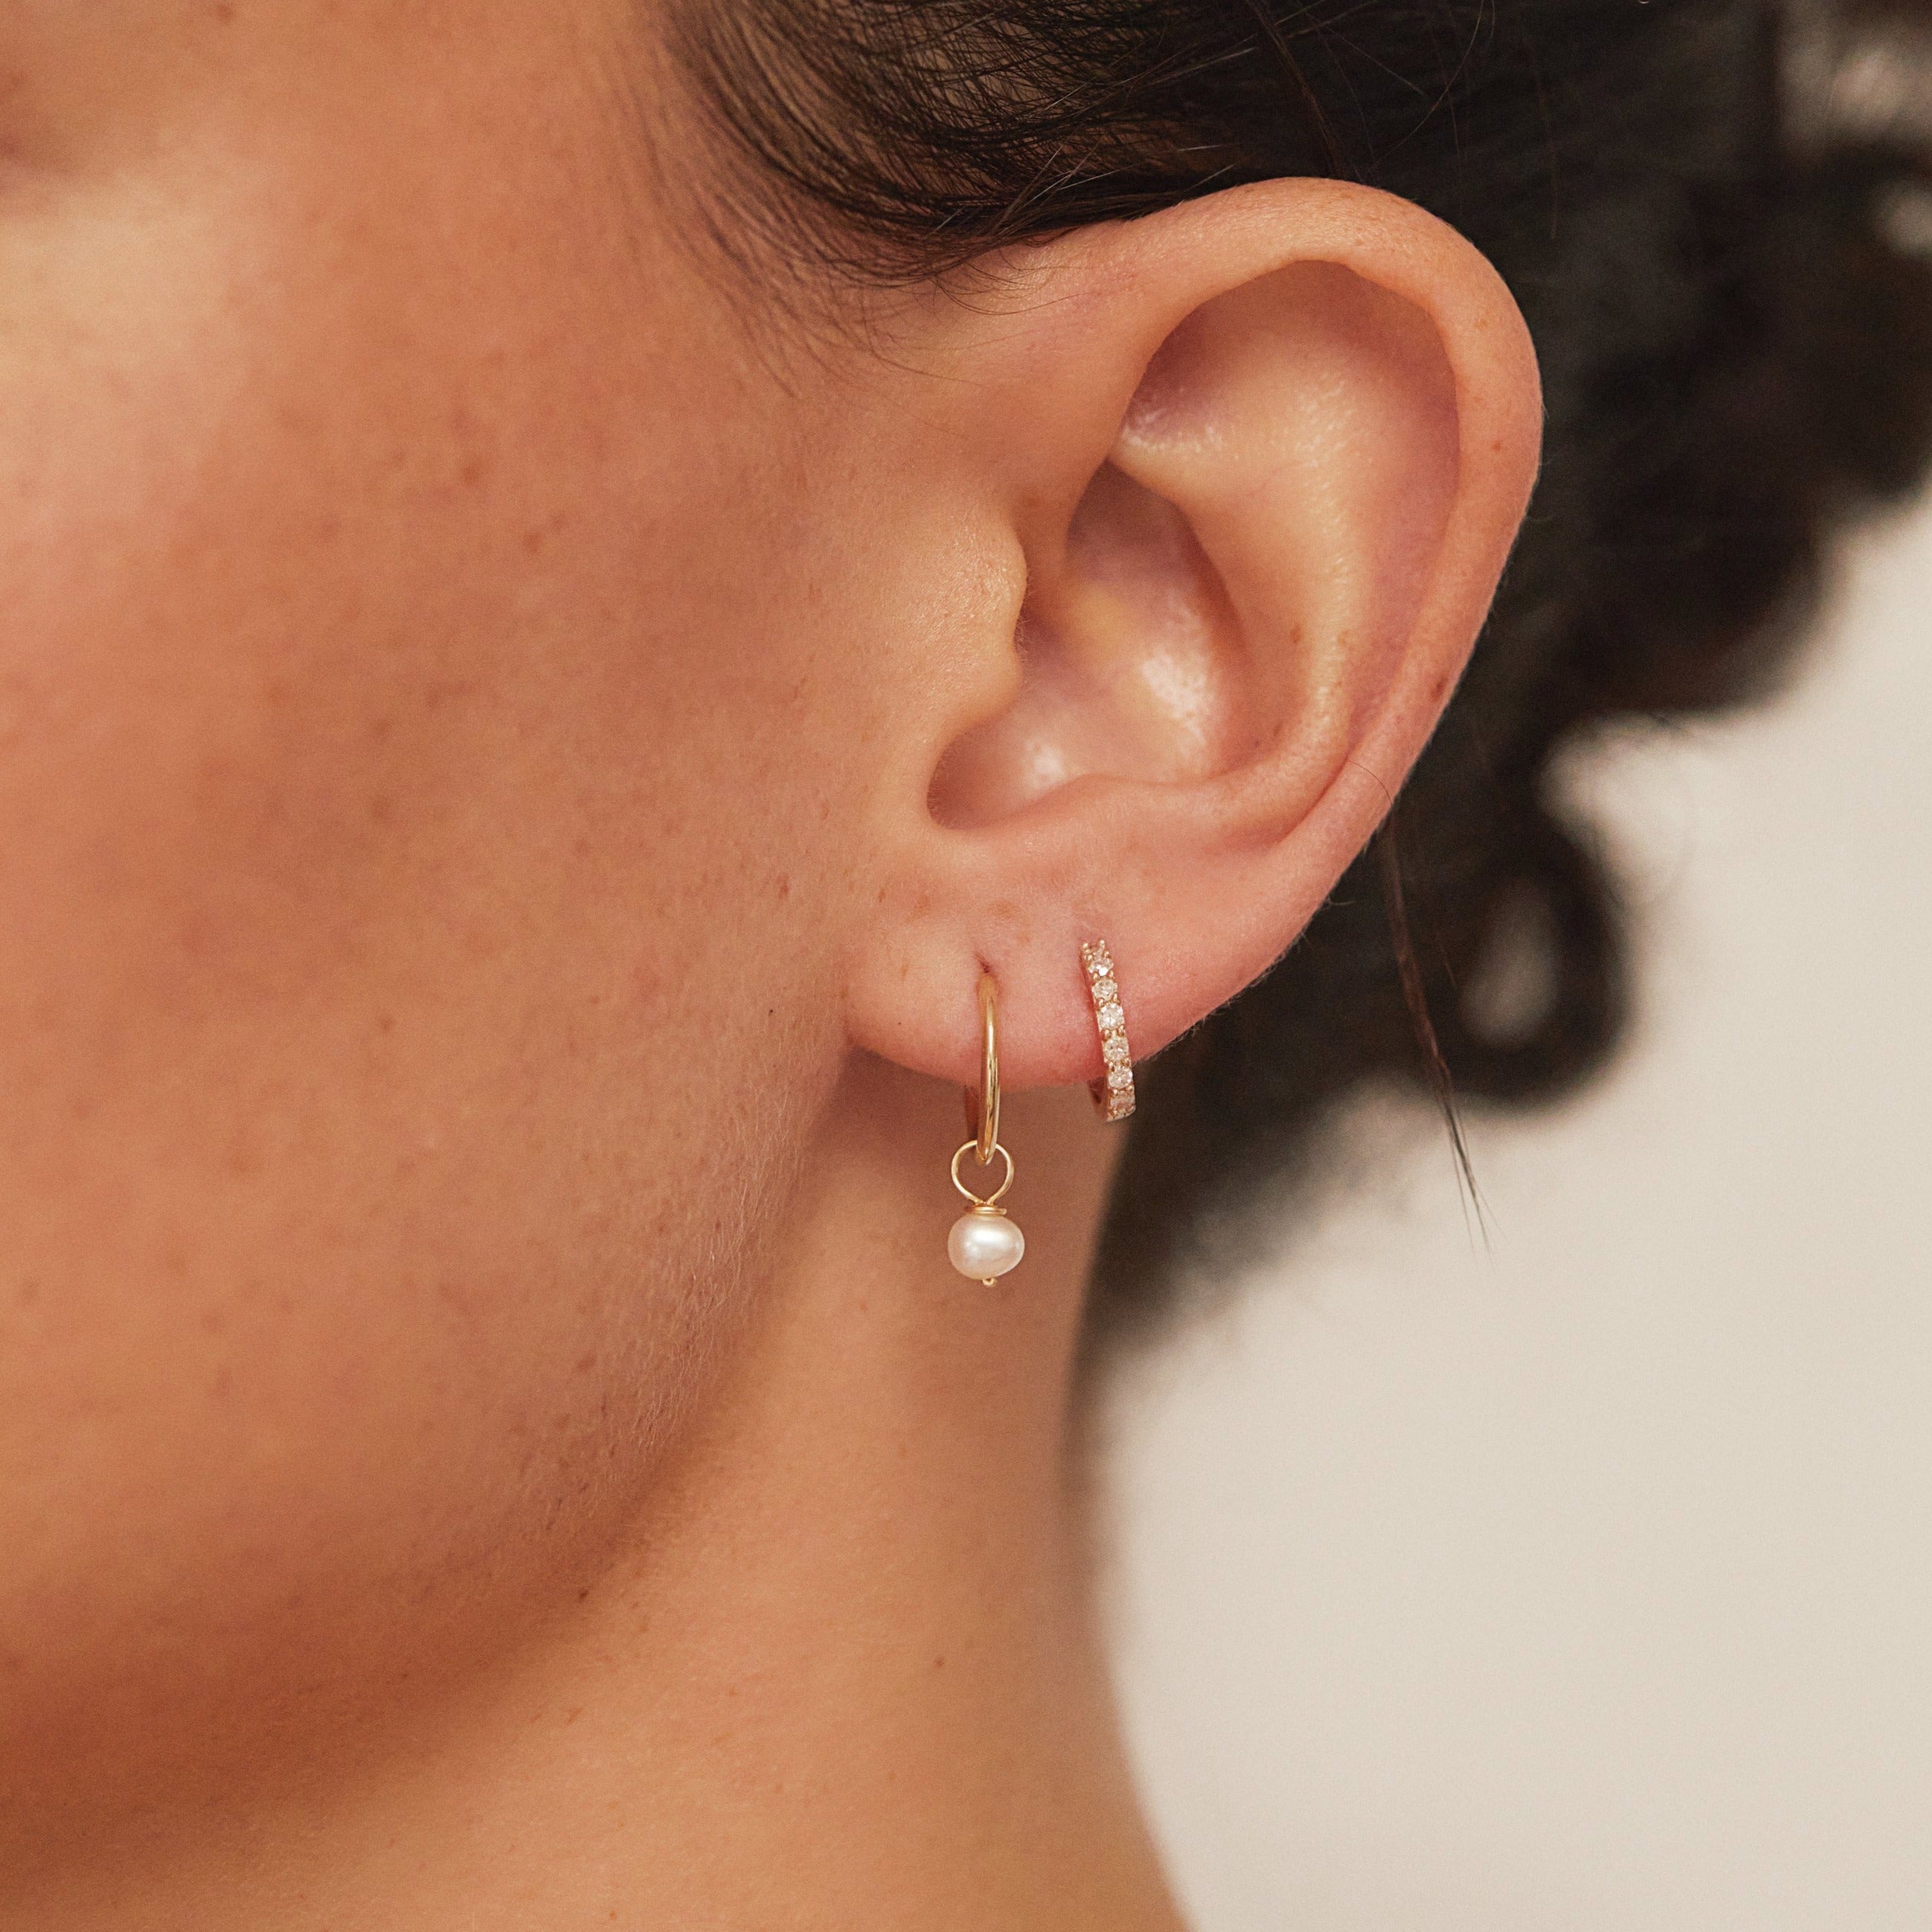 A gold small pearl drop hoop earring and a gold diamond style huggie hoop earring in an ear lobe